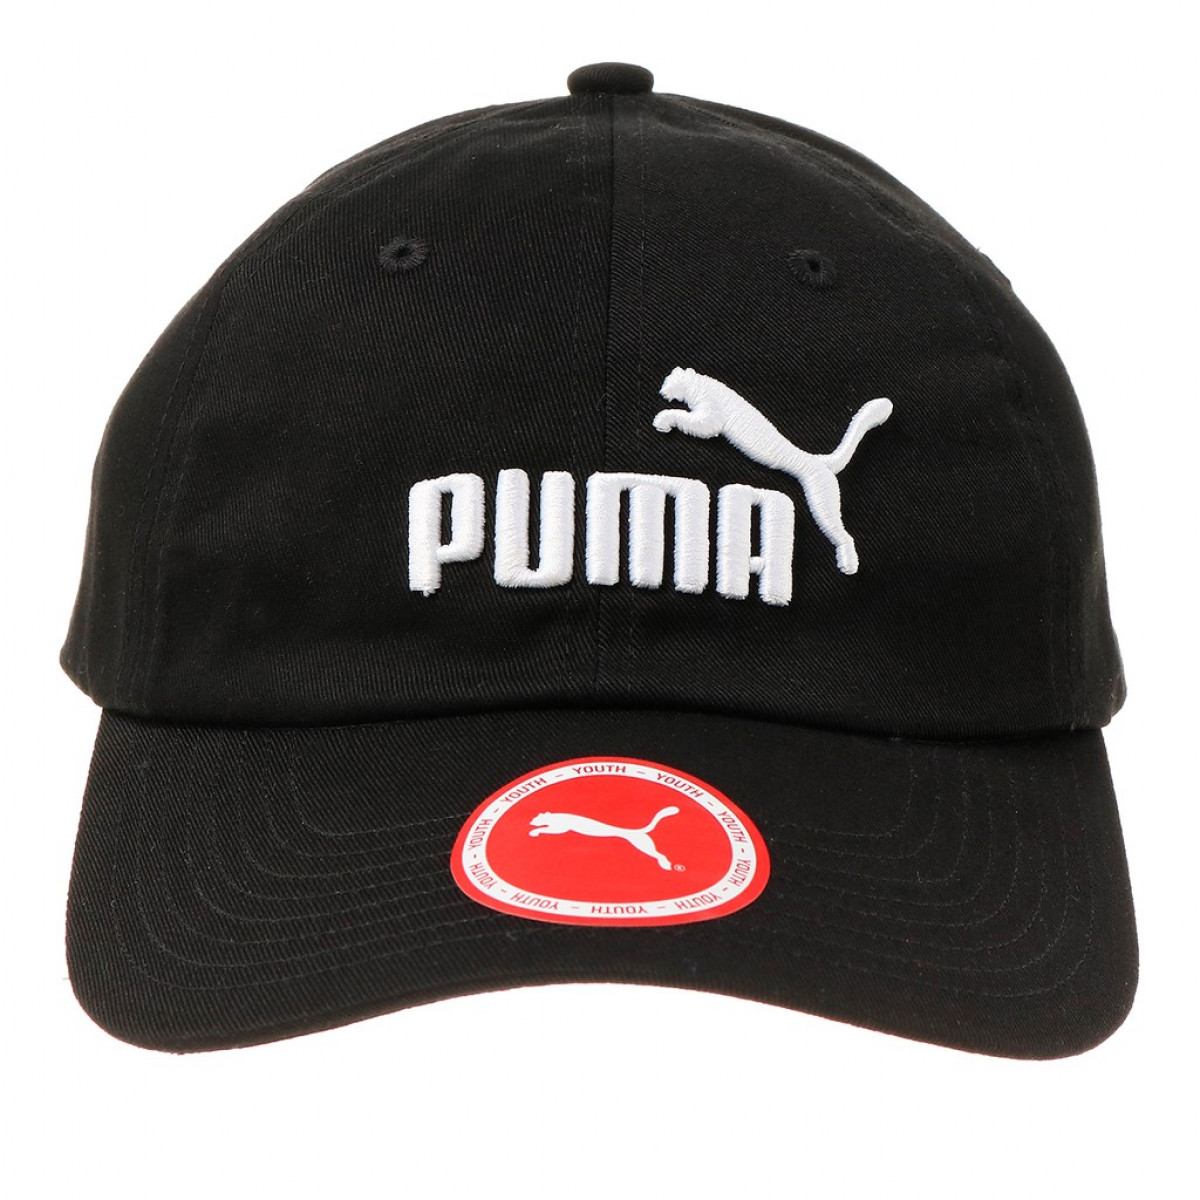 Puma baseball sapka junior fekete